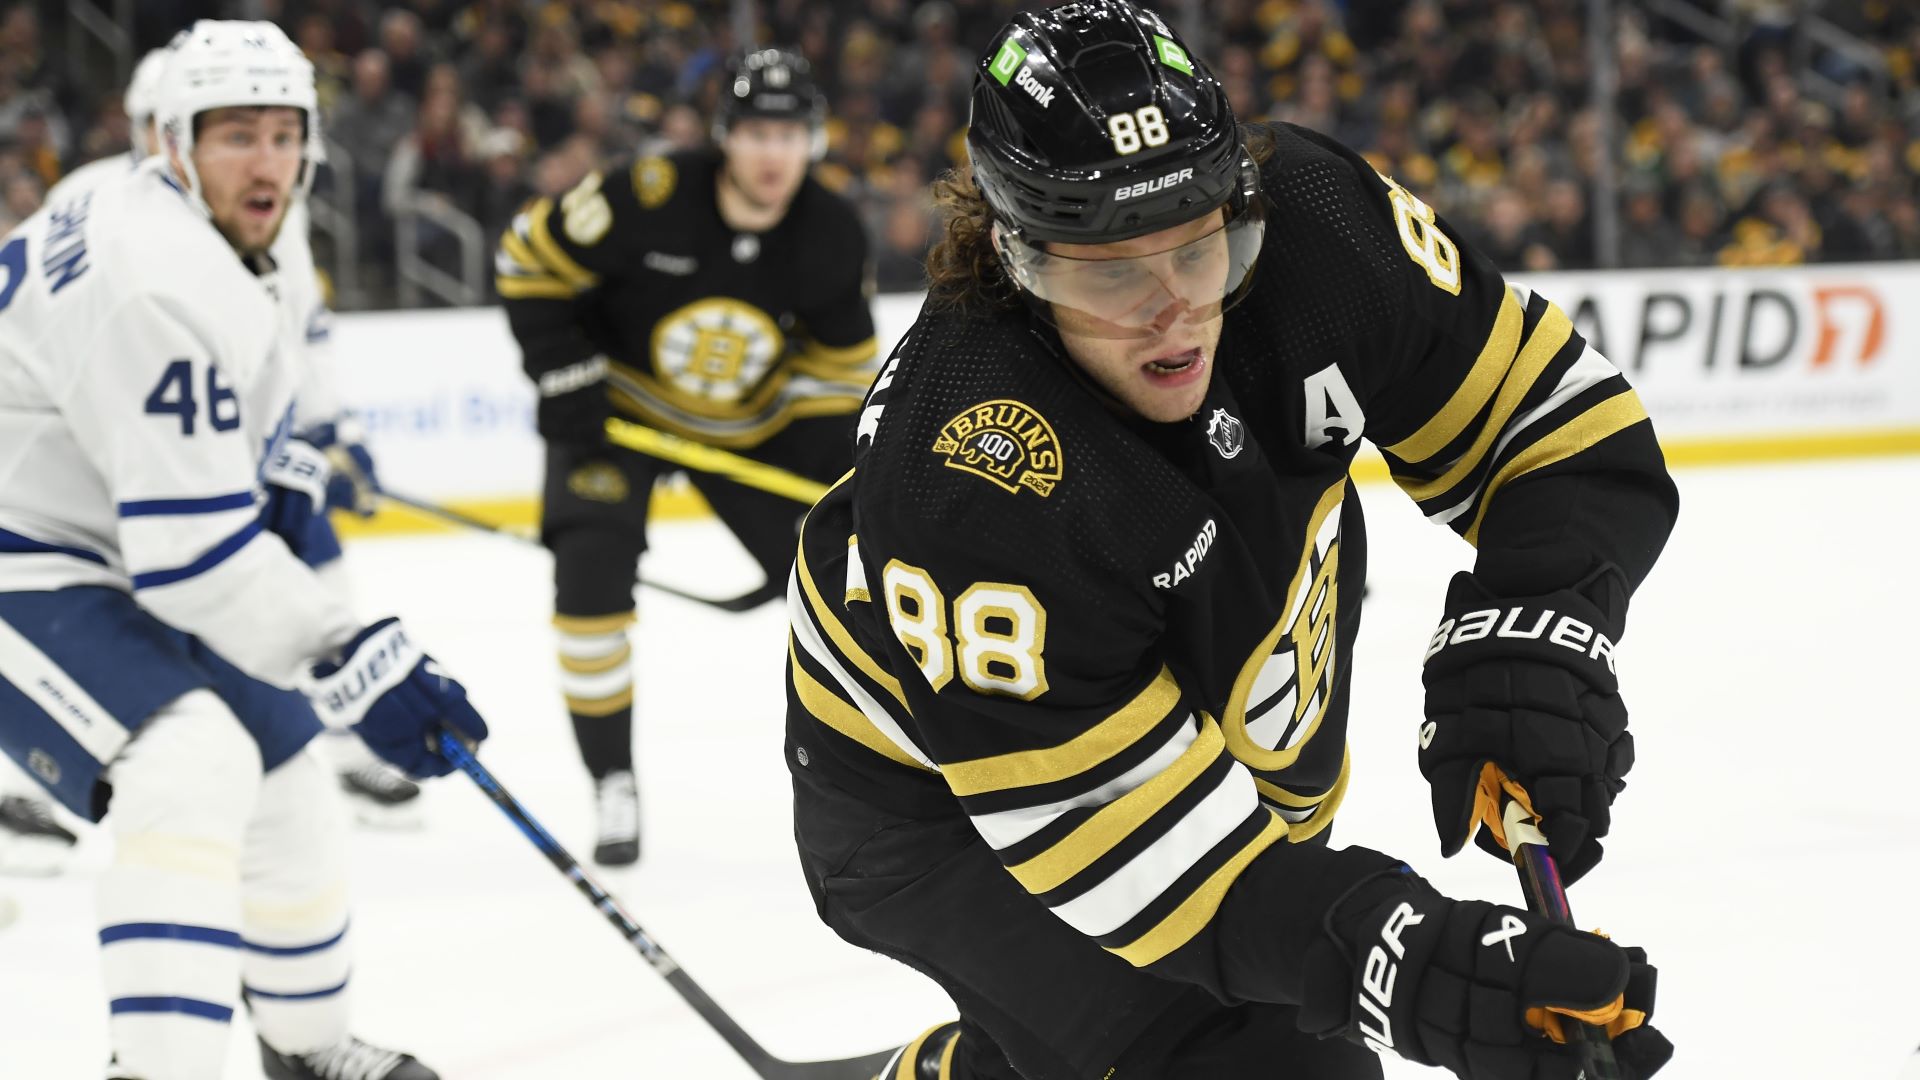 Bruins’ David Pastrnak Scores OT Goal To Vanquish Maple Leafs In
Game 7